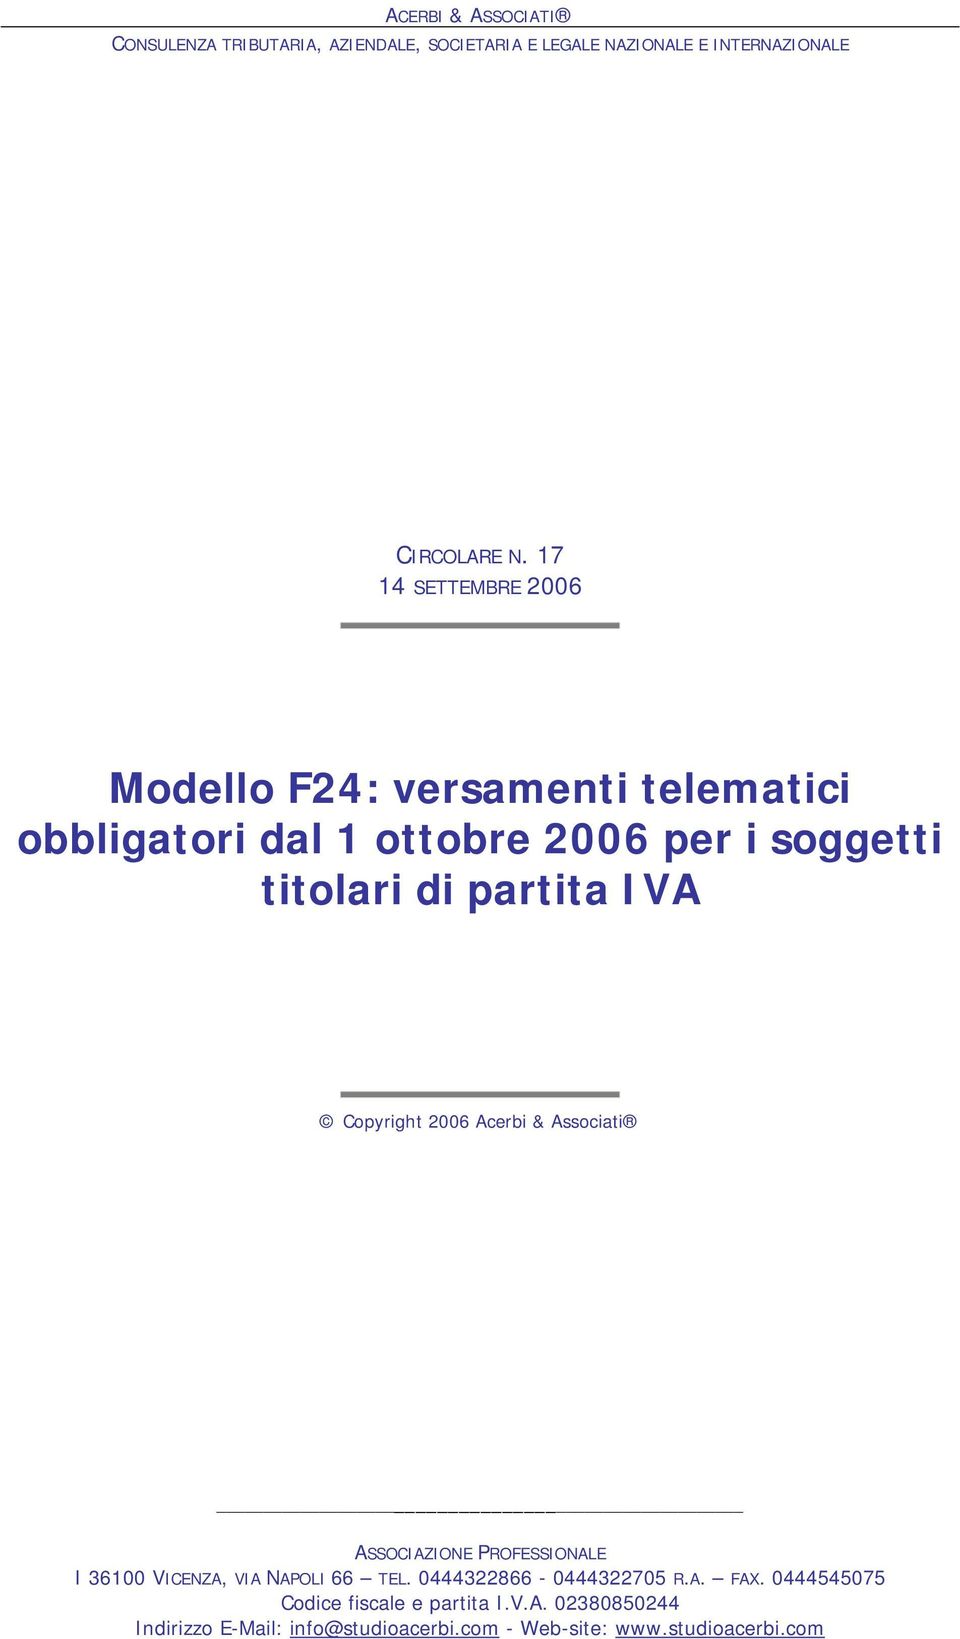 IVA Copyright 2006 Acerbi & Associati ASSOCIAZIONE PROFESSIONALE I 36100 VICENZA, VIA NAPOLI 66 TEL.